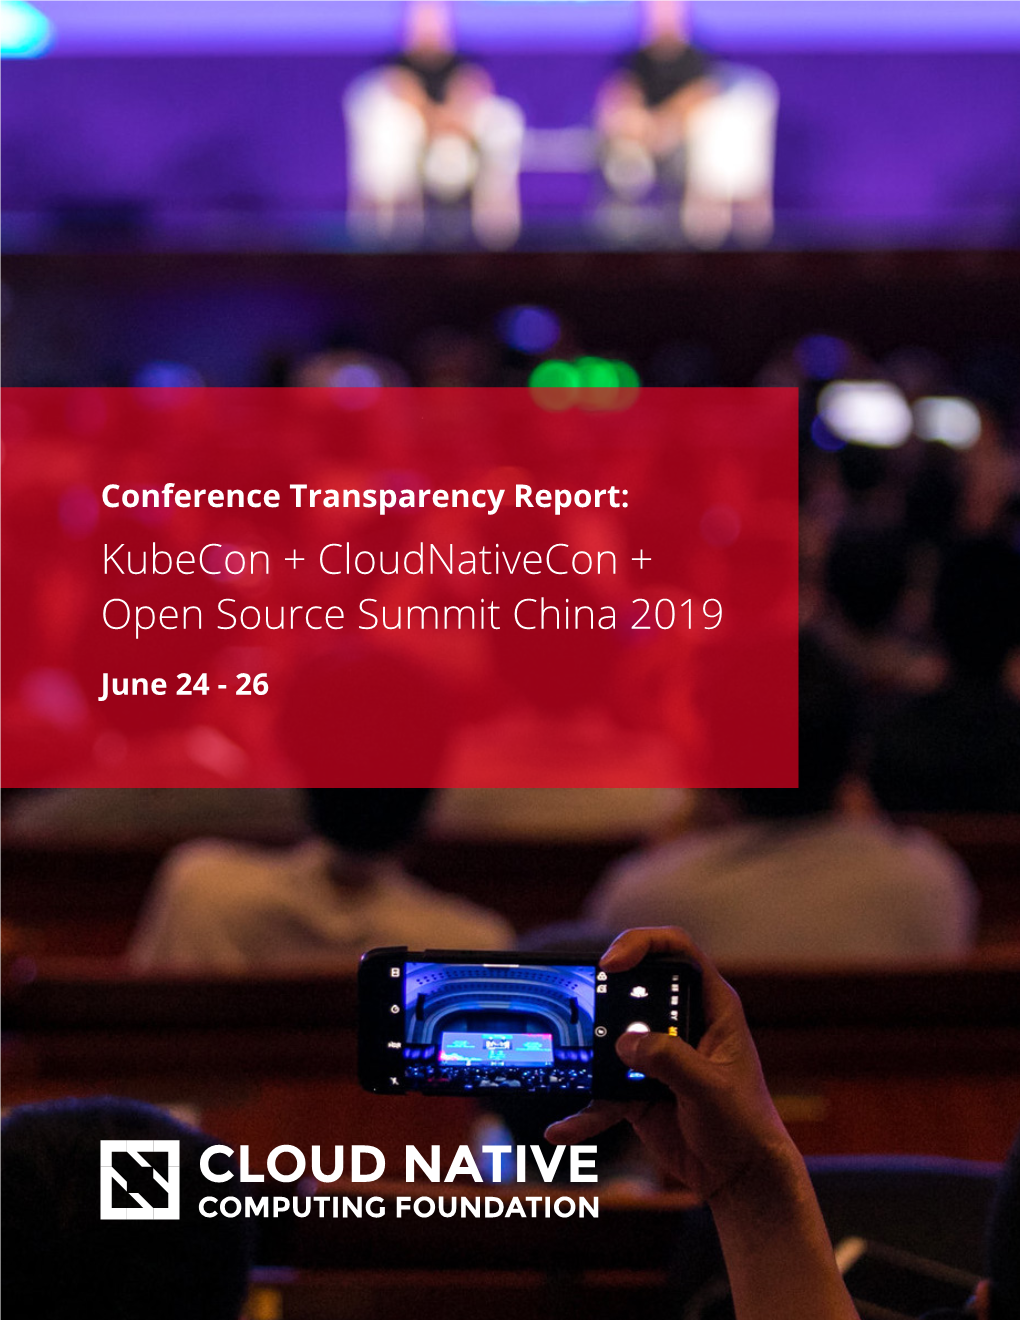 Kubecon + Cloudnativecon + Open Source Summit China 2019